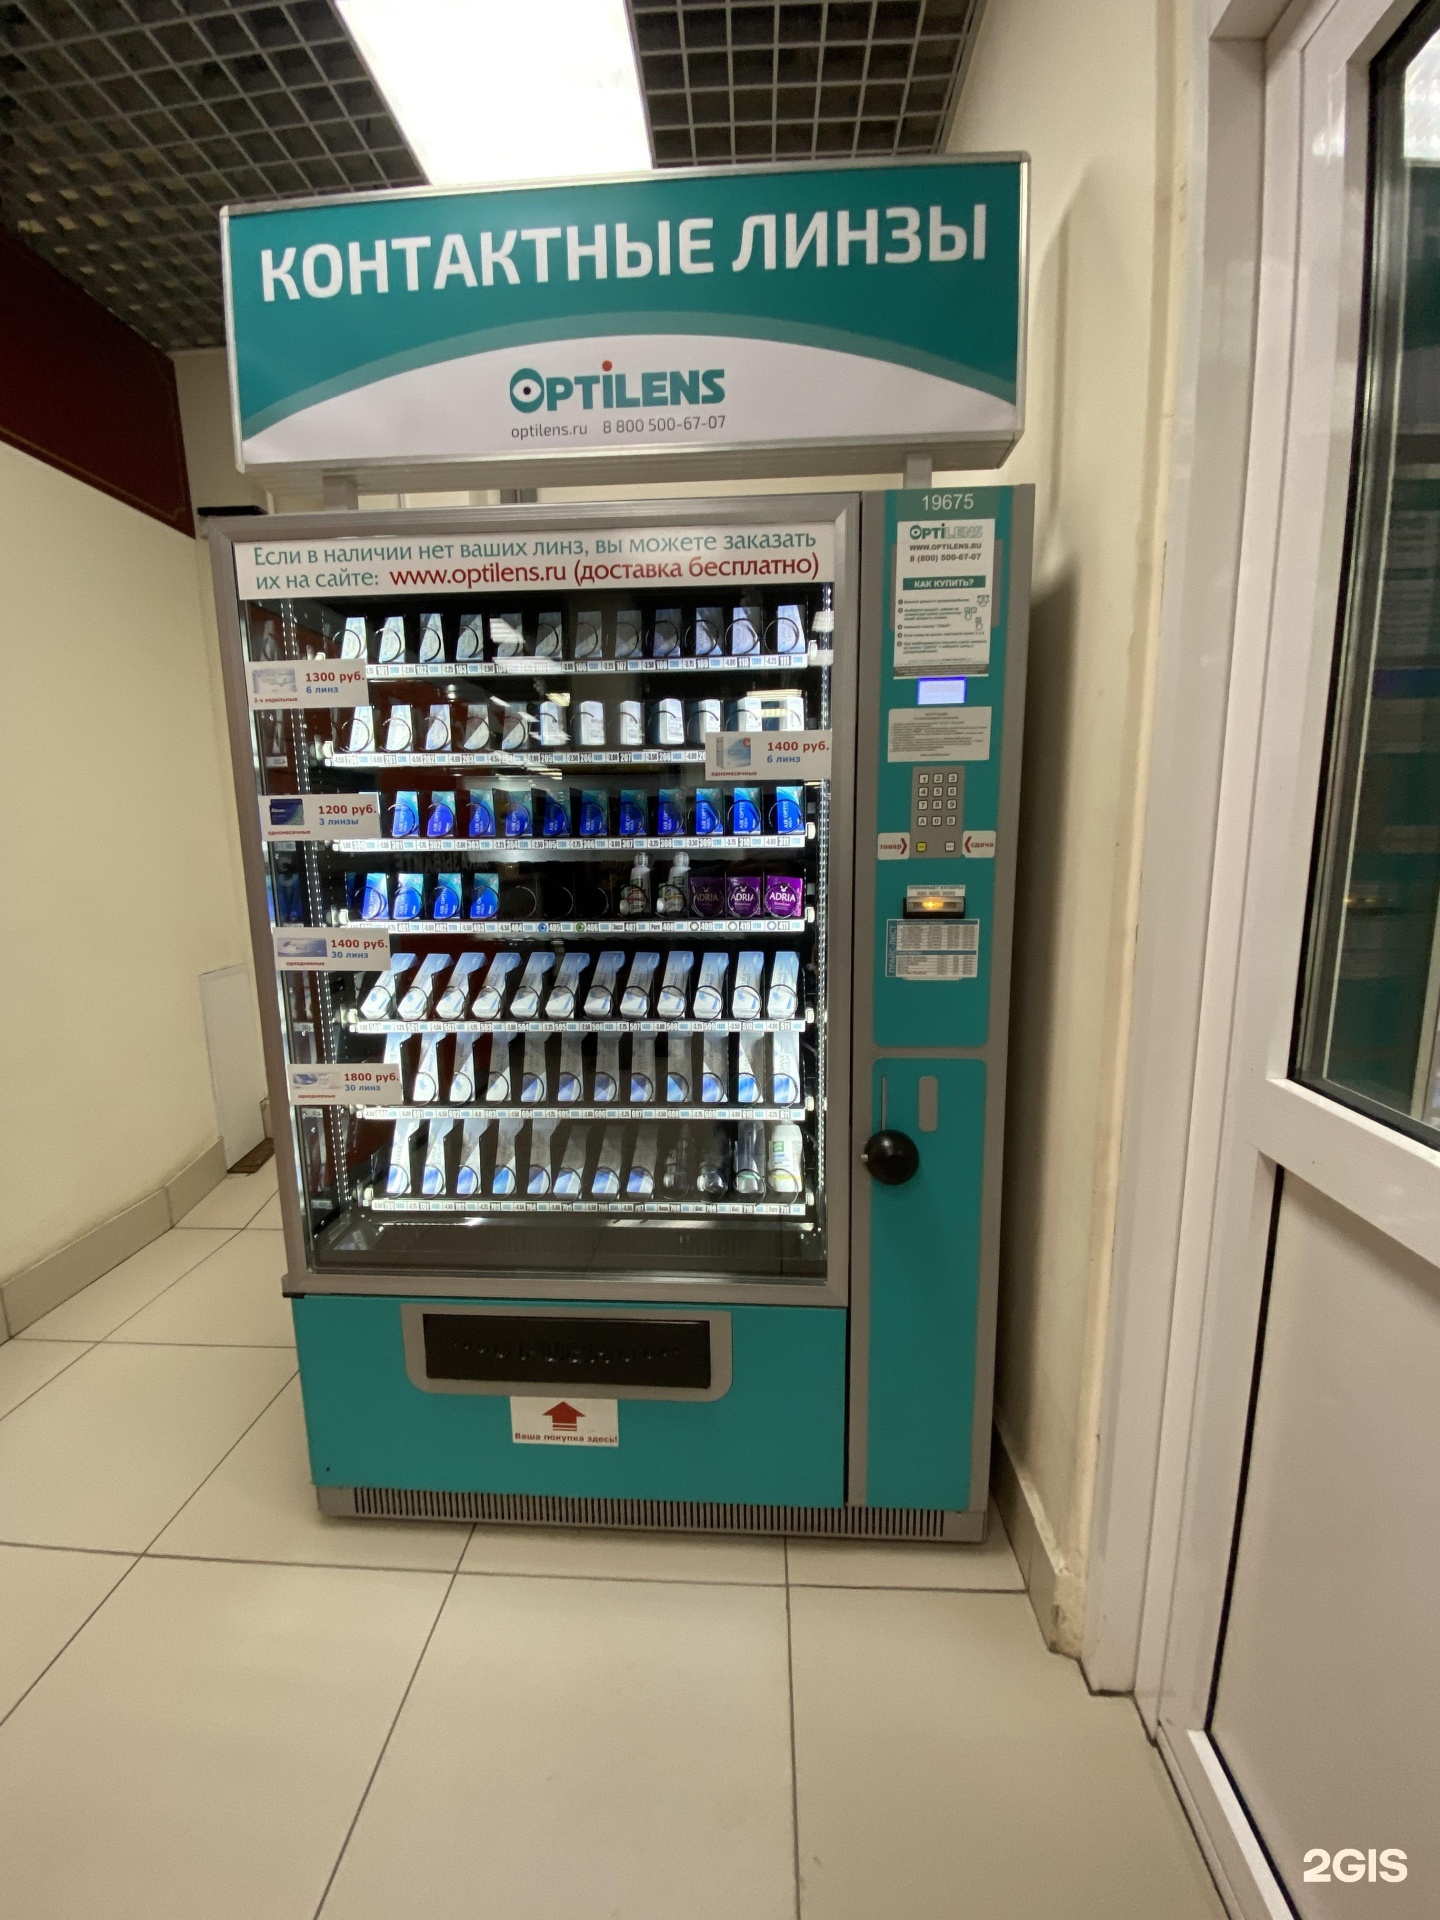 Сайт оптиленс омск. Оптиленс. Автомат с линзами в Омск. Optilens Мелеуз.